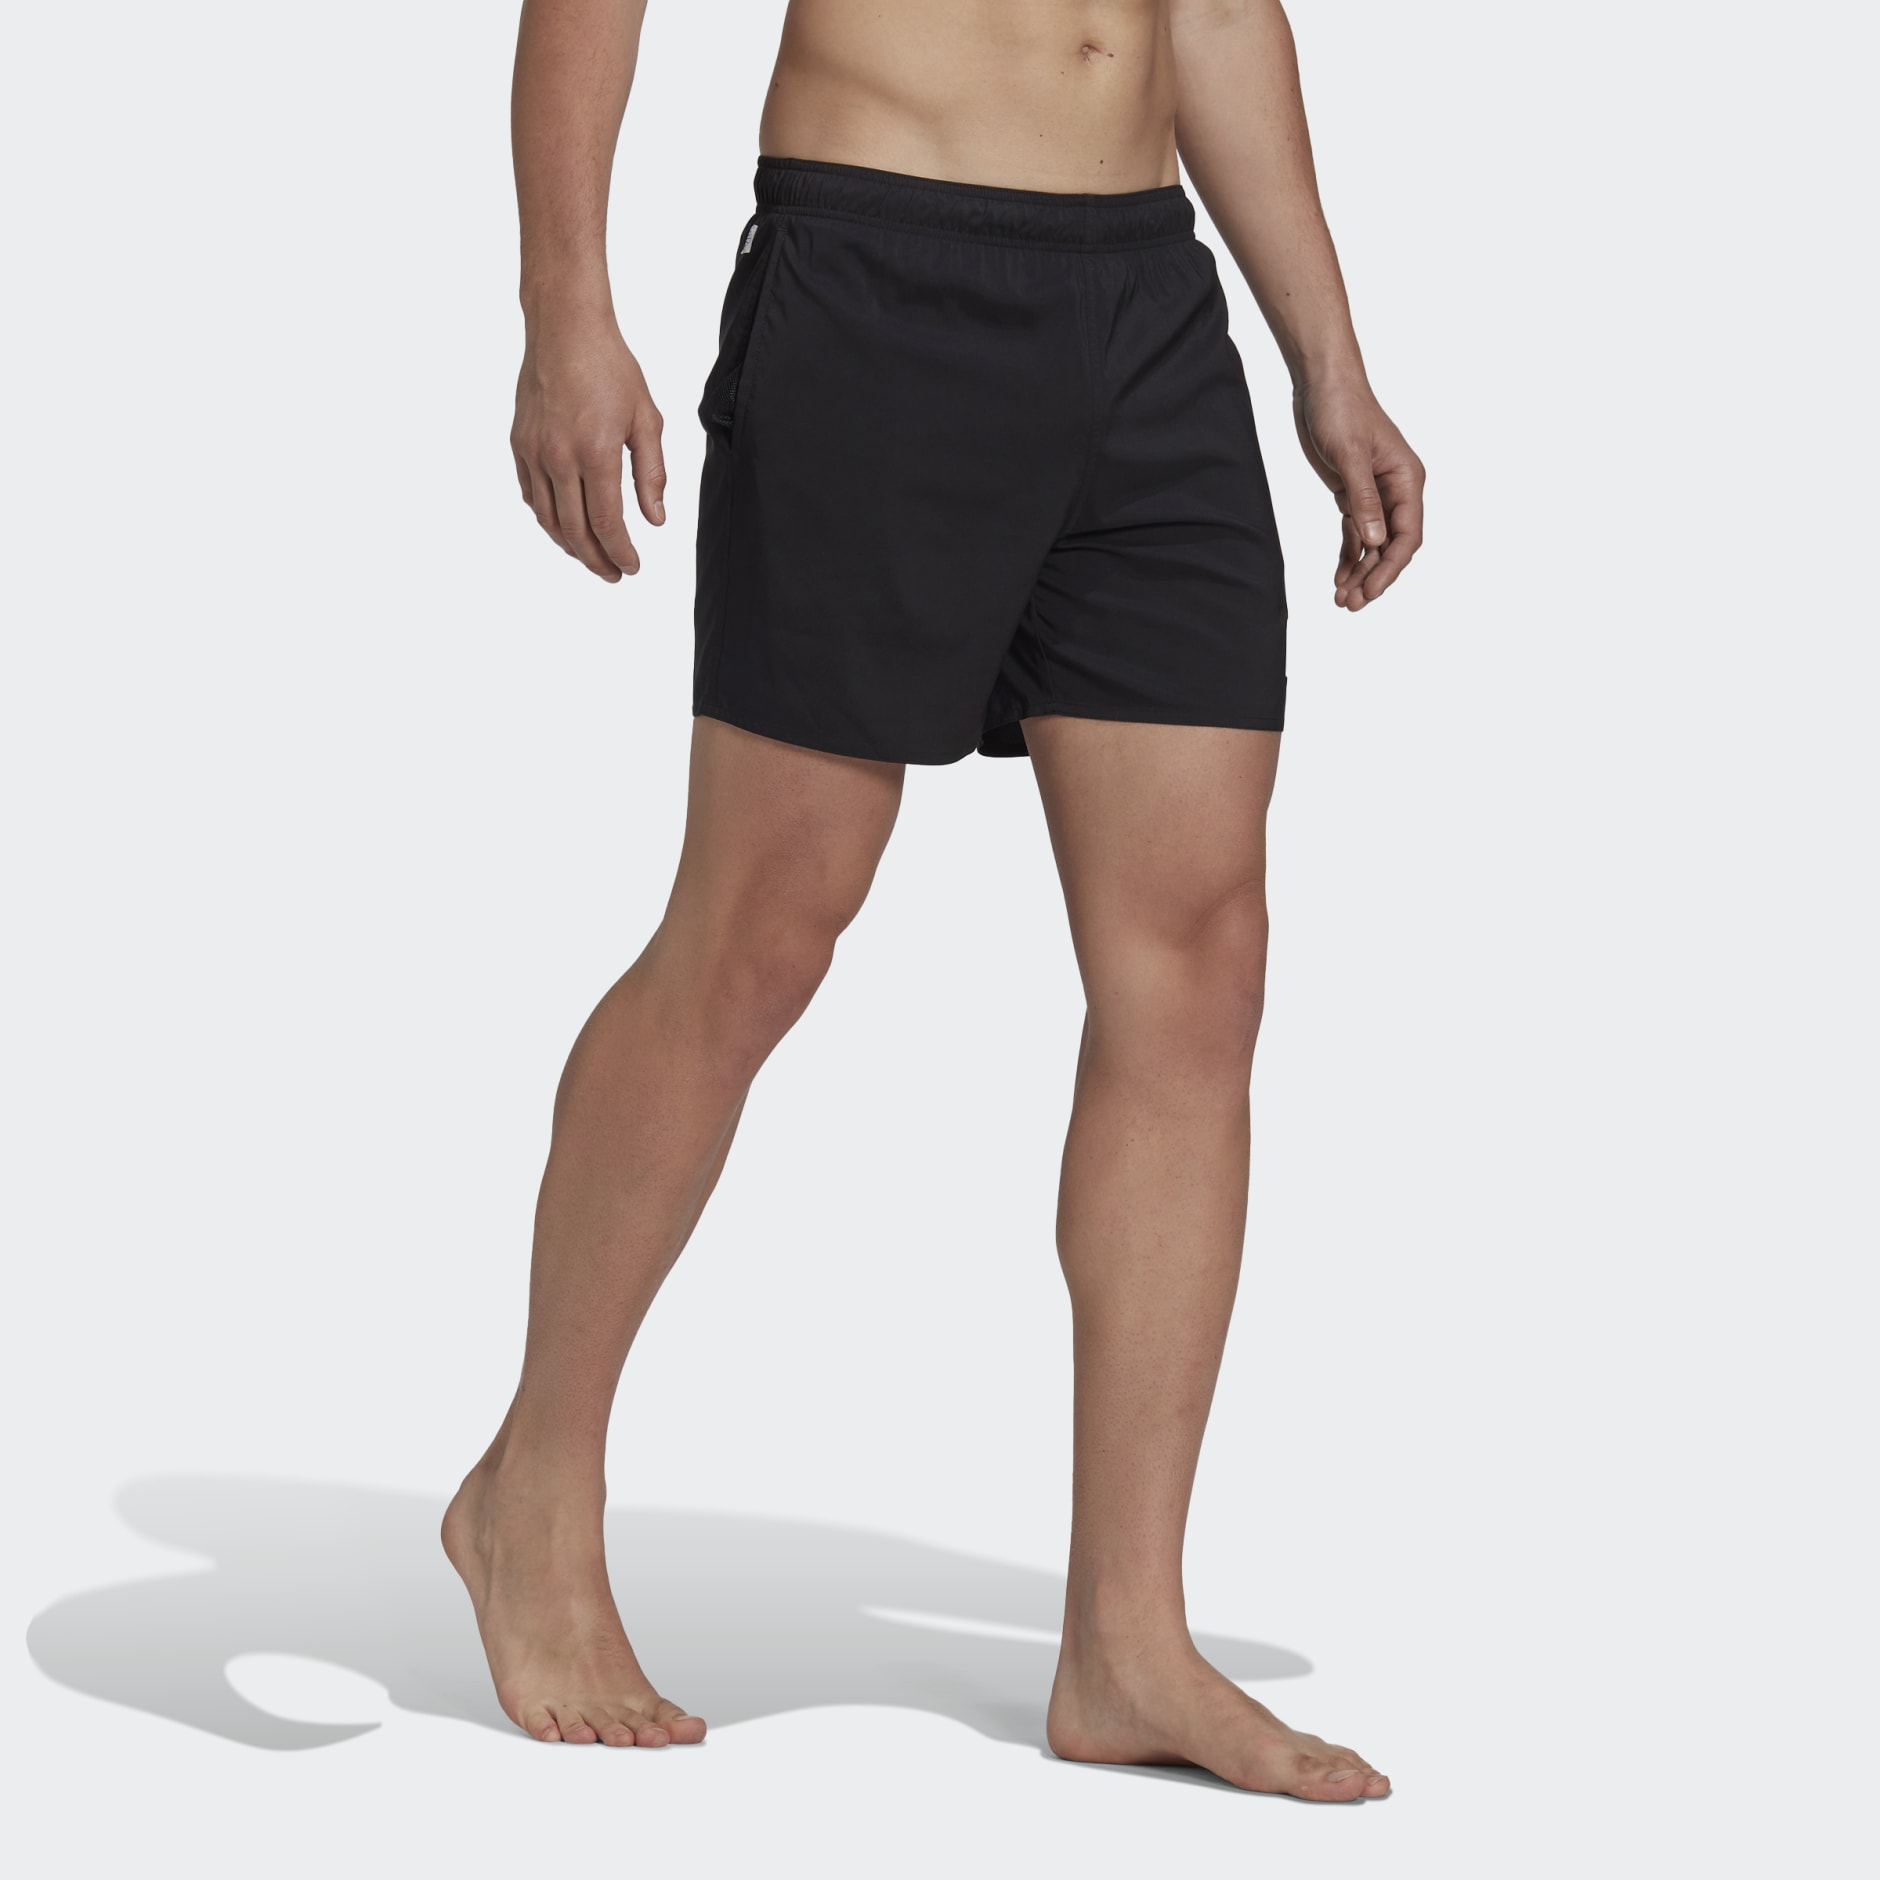 Clothing - Short Length Solid Swim Shorts - Black | adidas South Africa